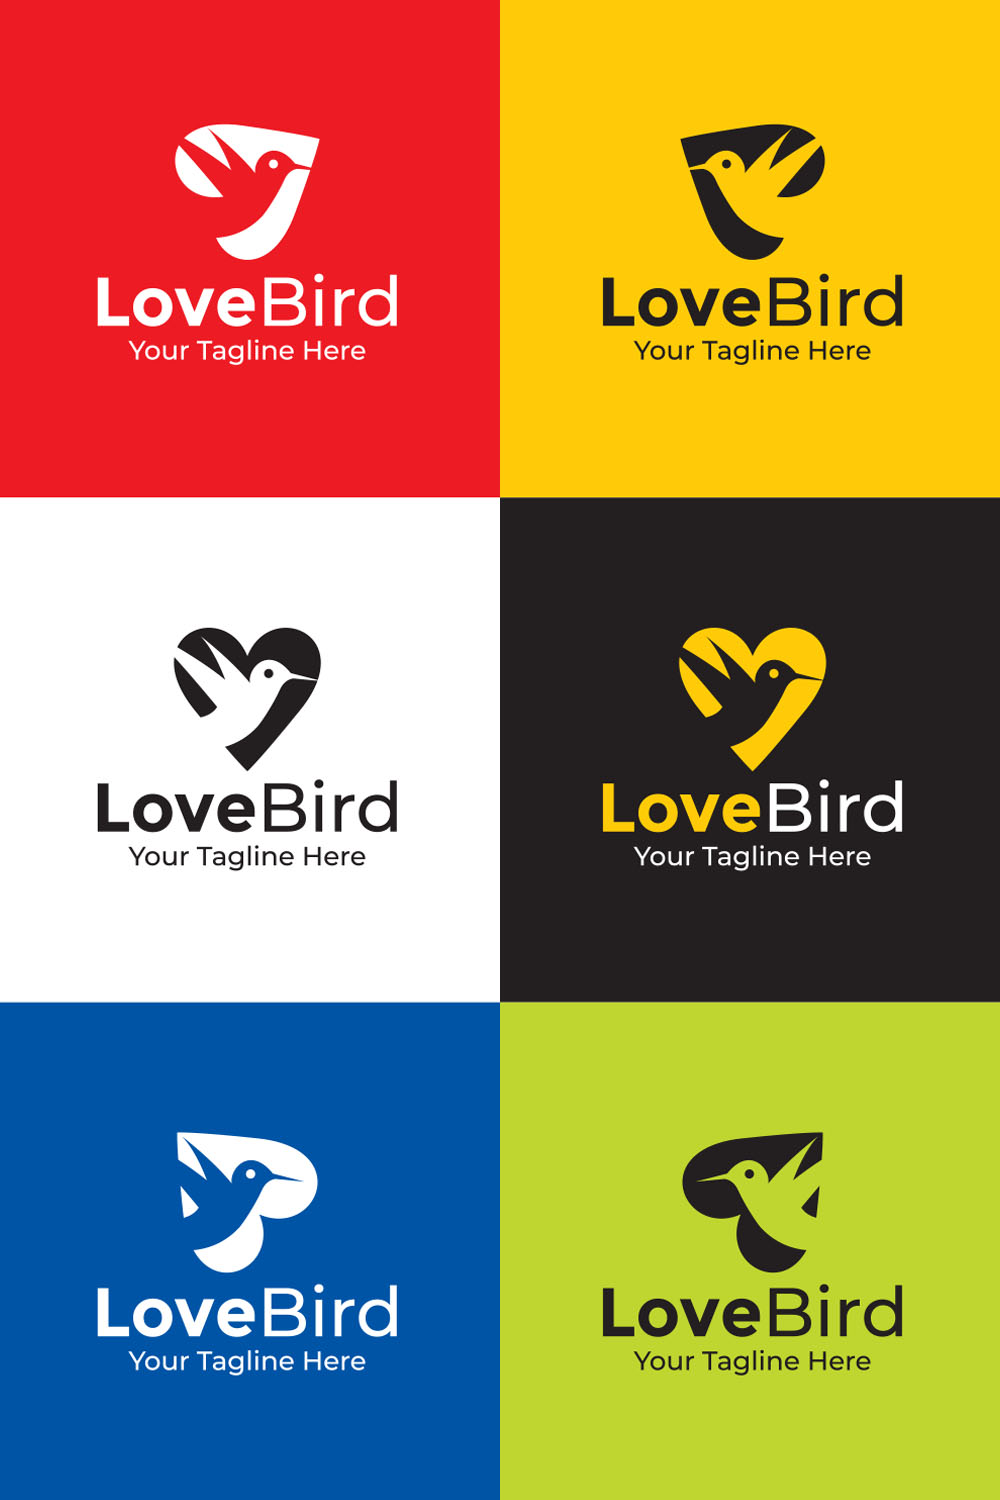 Love Bird Logo Pinterest collage image.